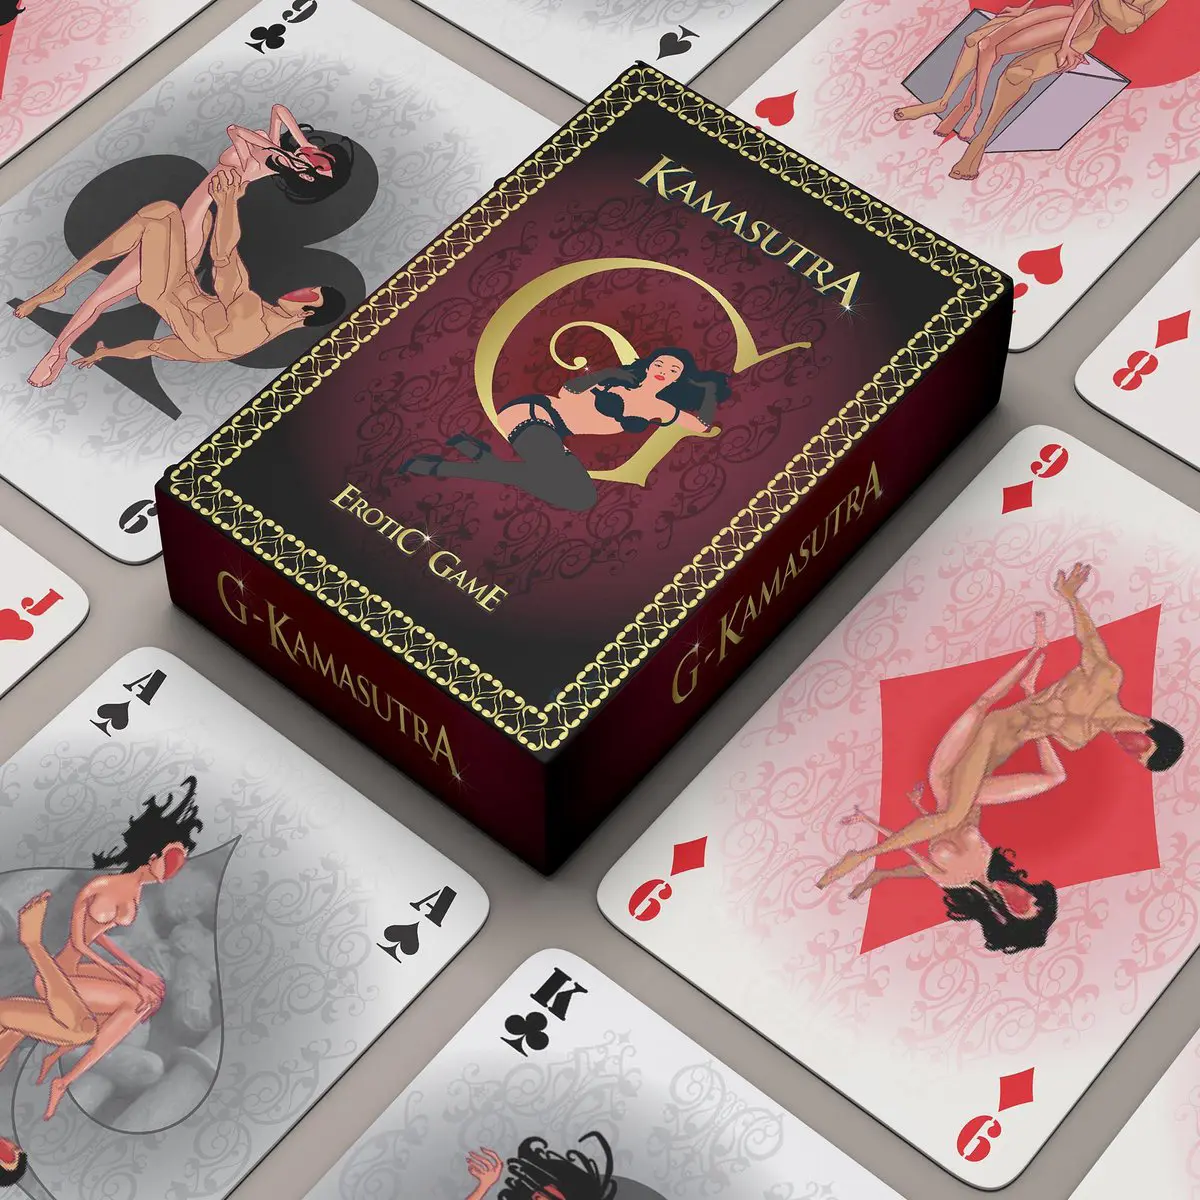 G-Kamasutra Poker Cards - Erotic Playing Cards • Intimate Distribution